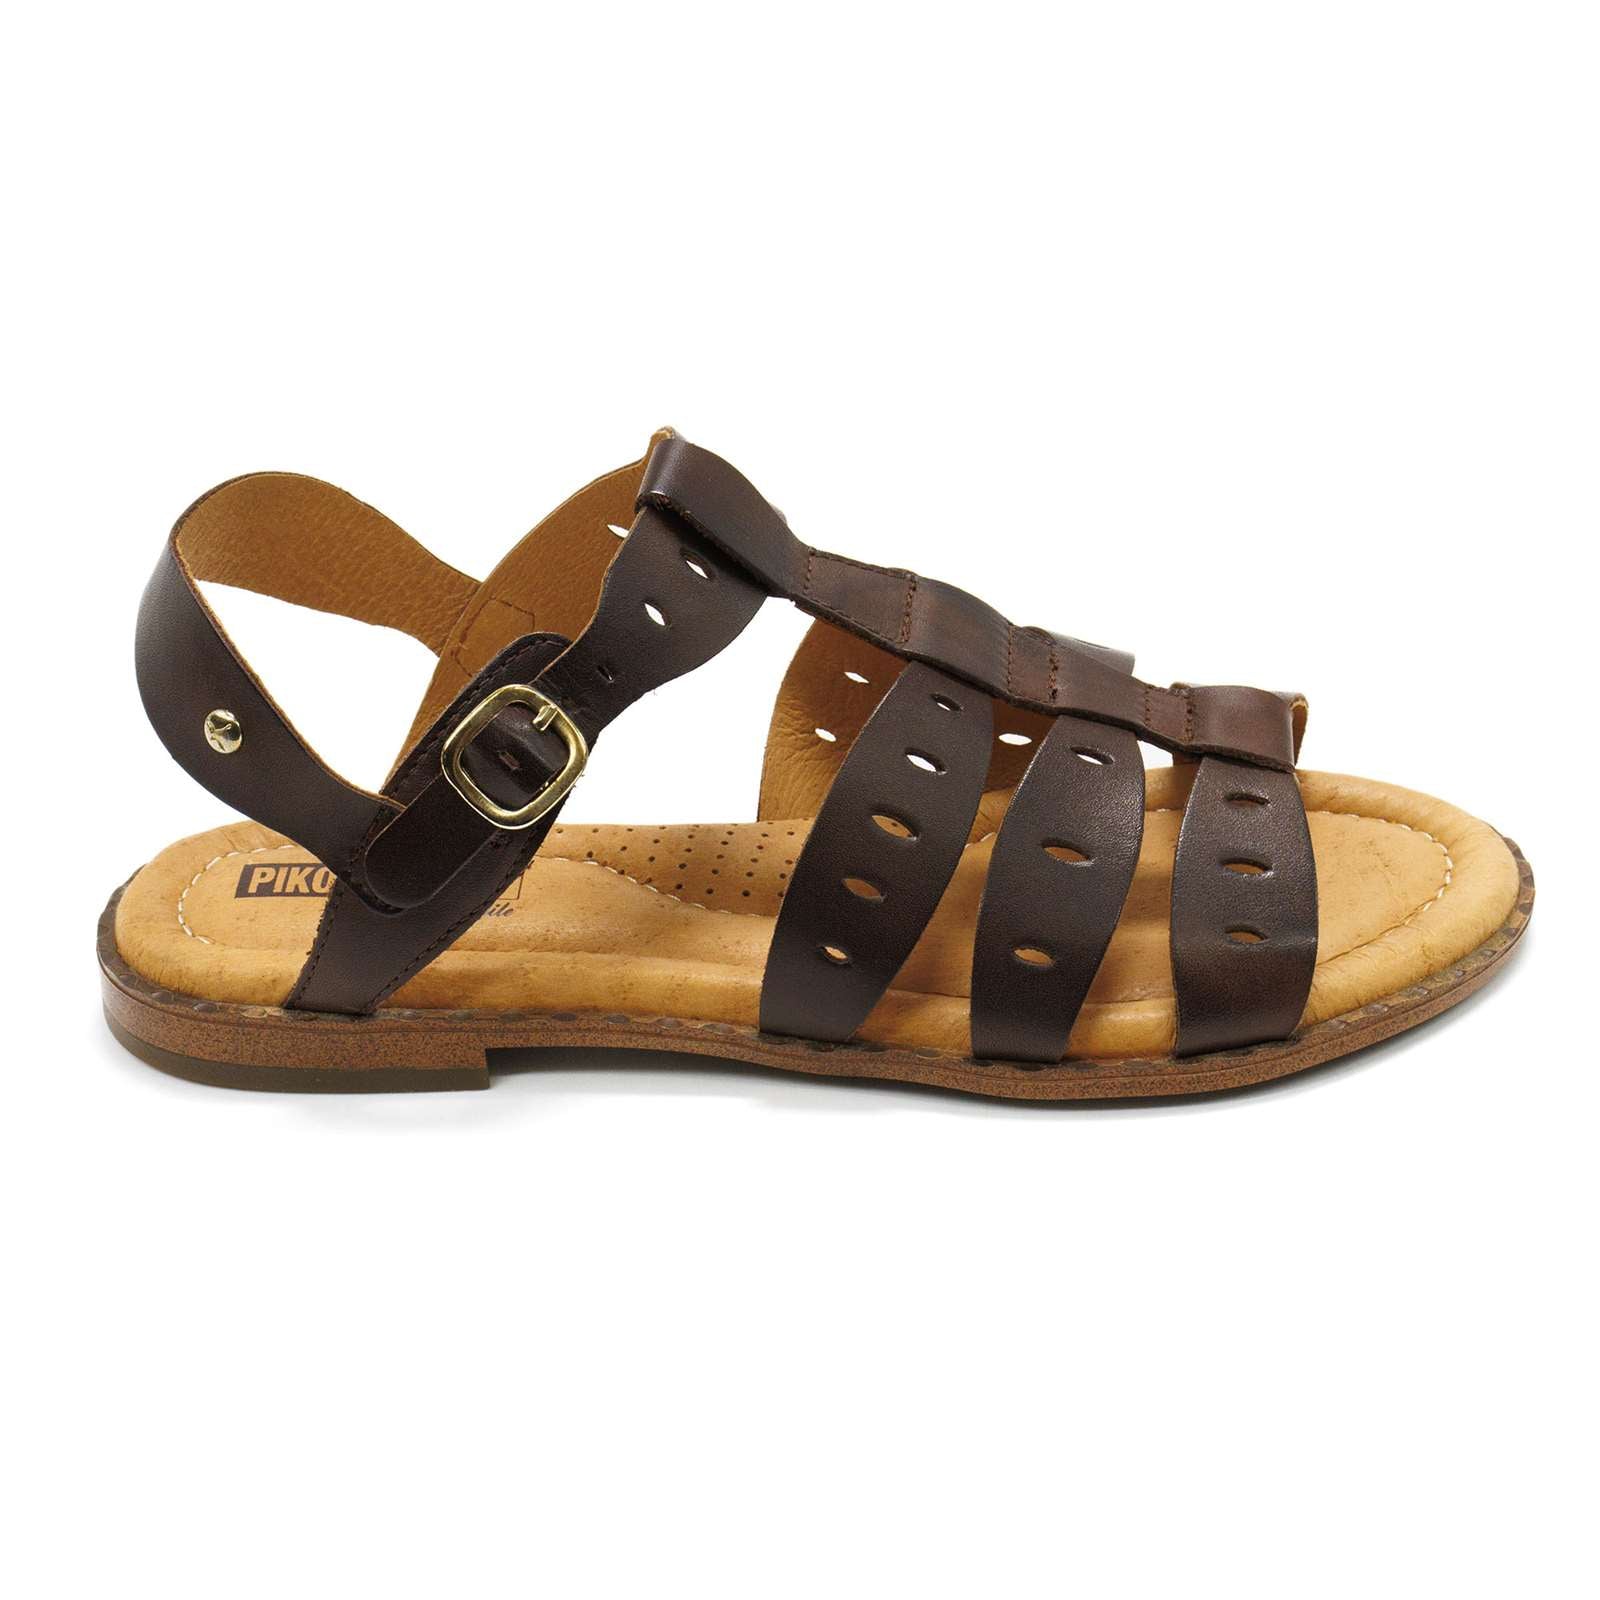 Pikolinos Women Algar Gladiator Leather Sandals